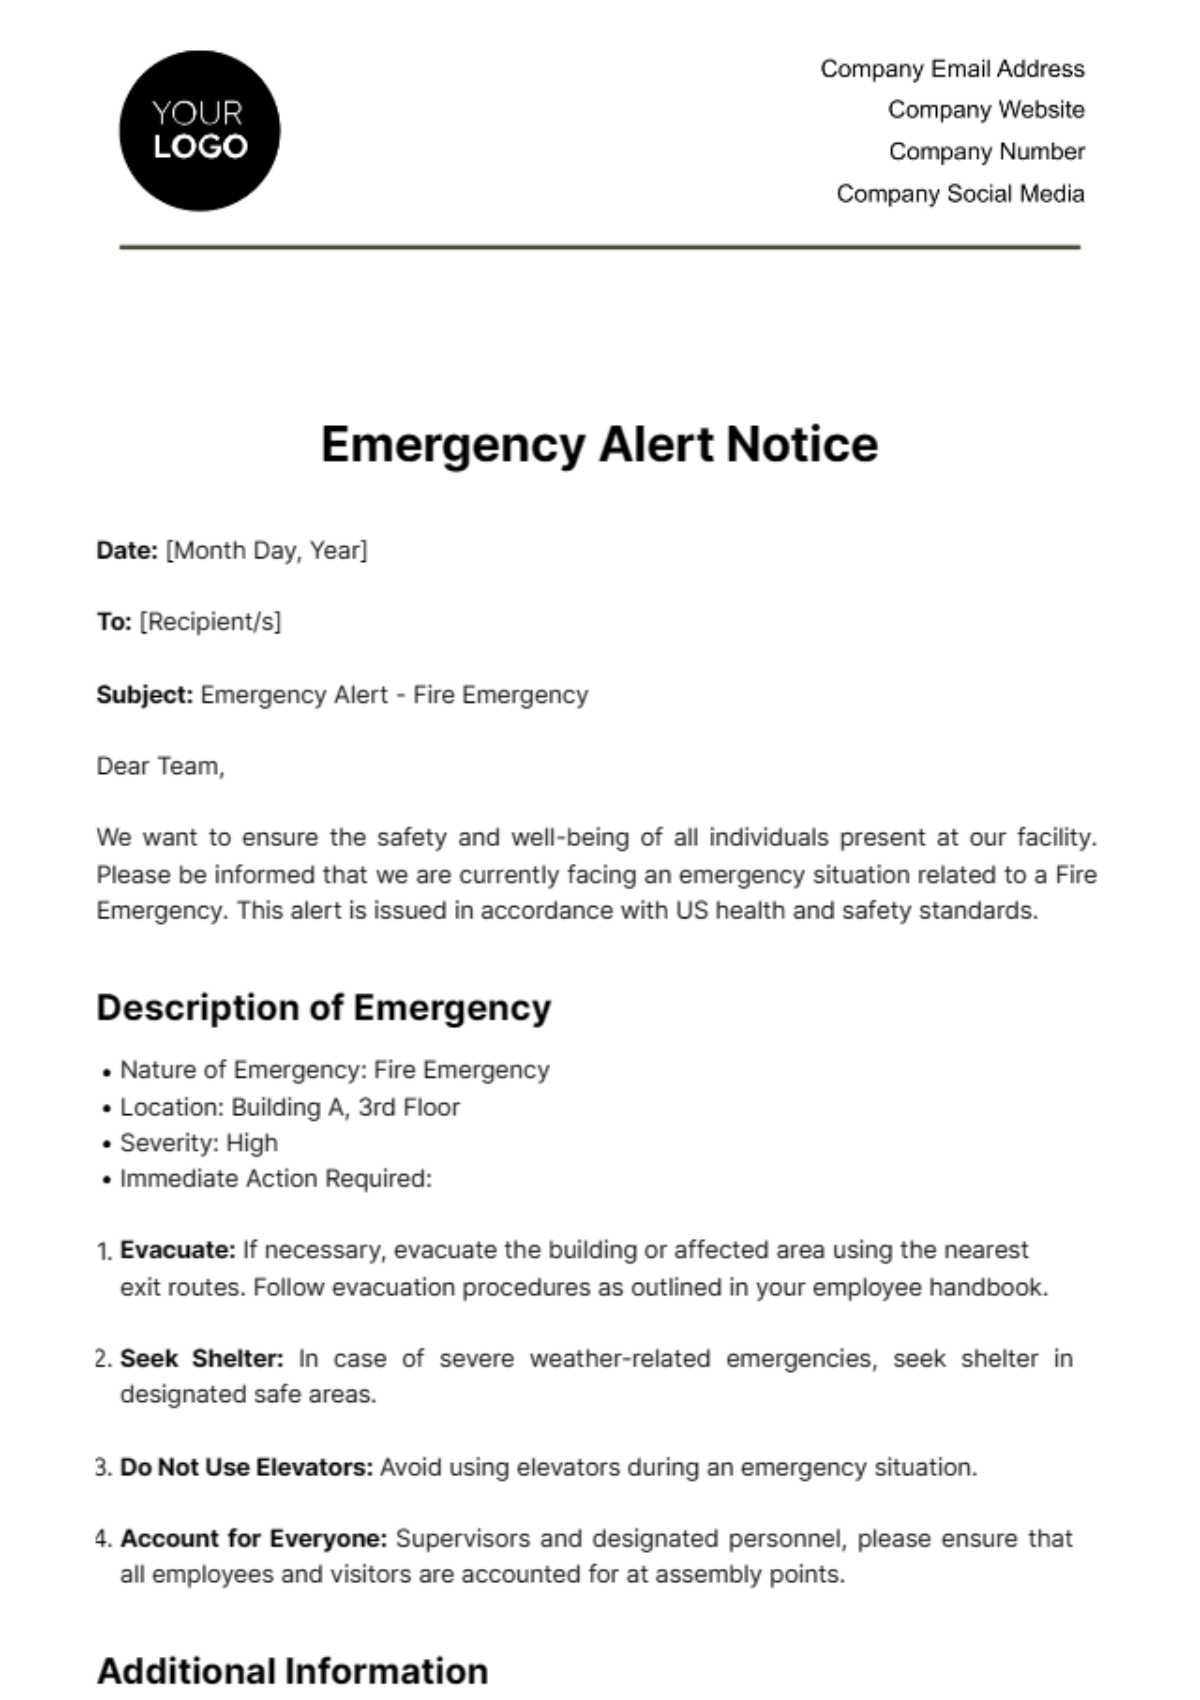 Emergency Alert Notice Template